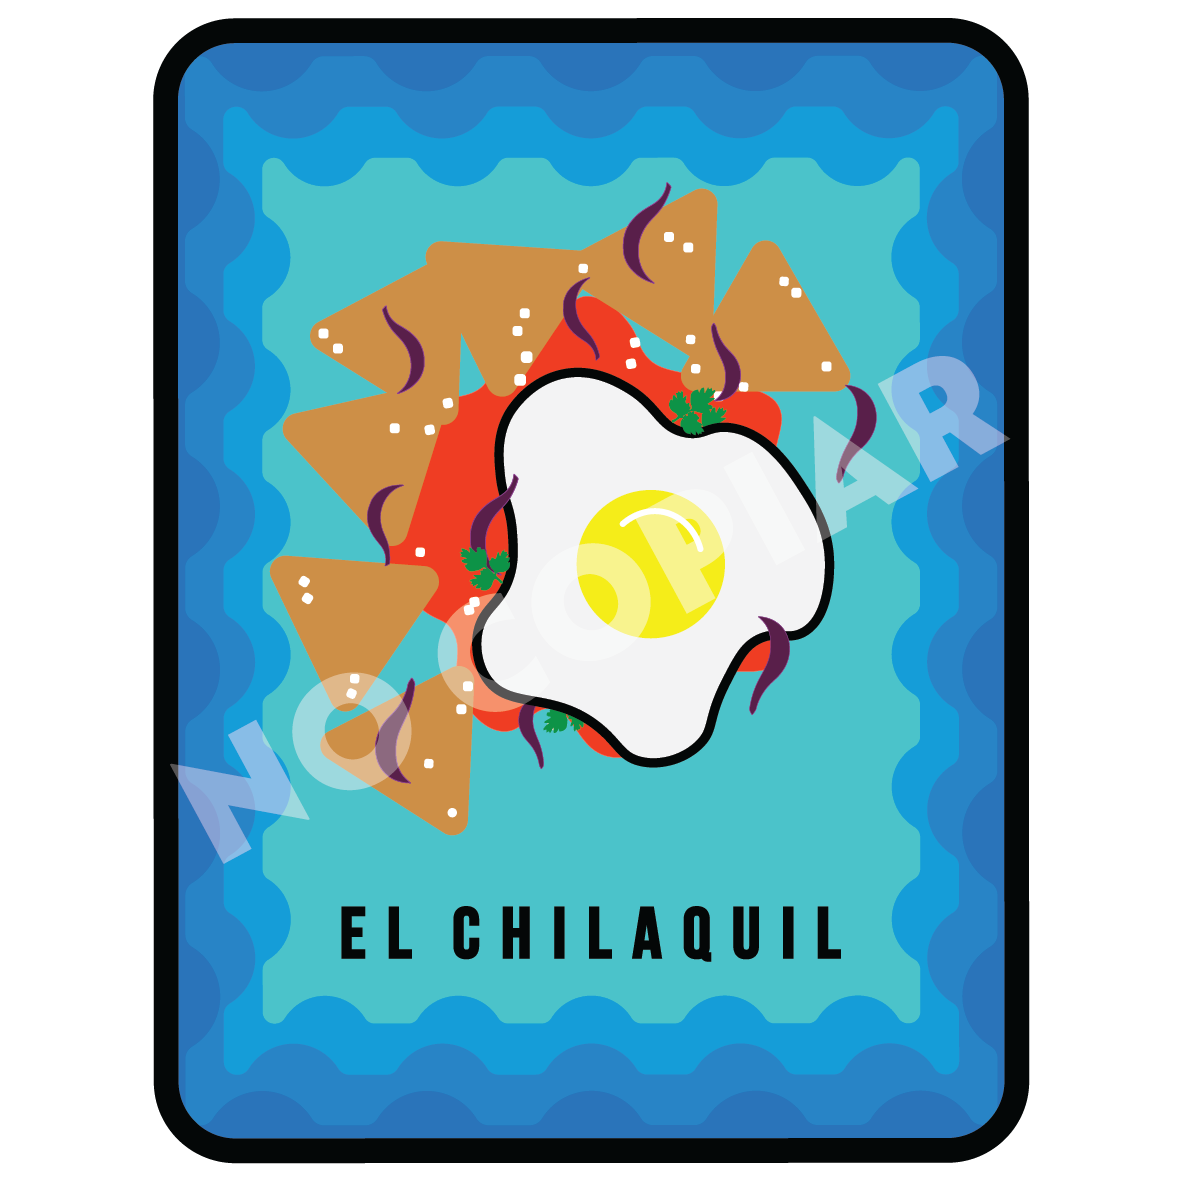 El chilaquil